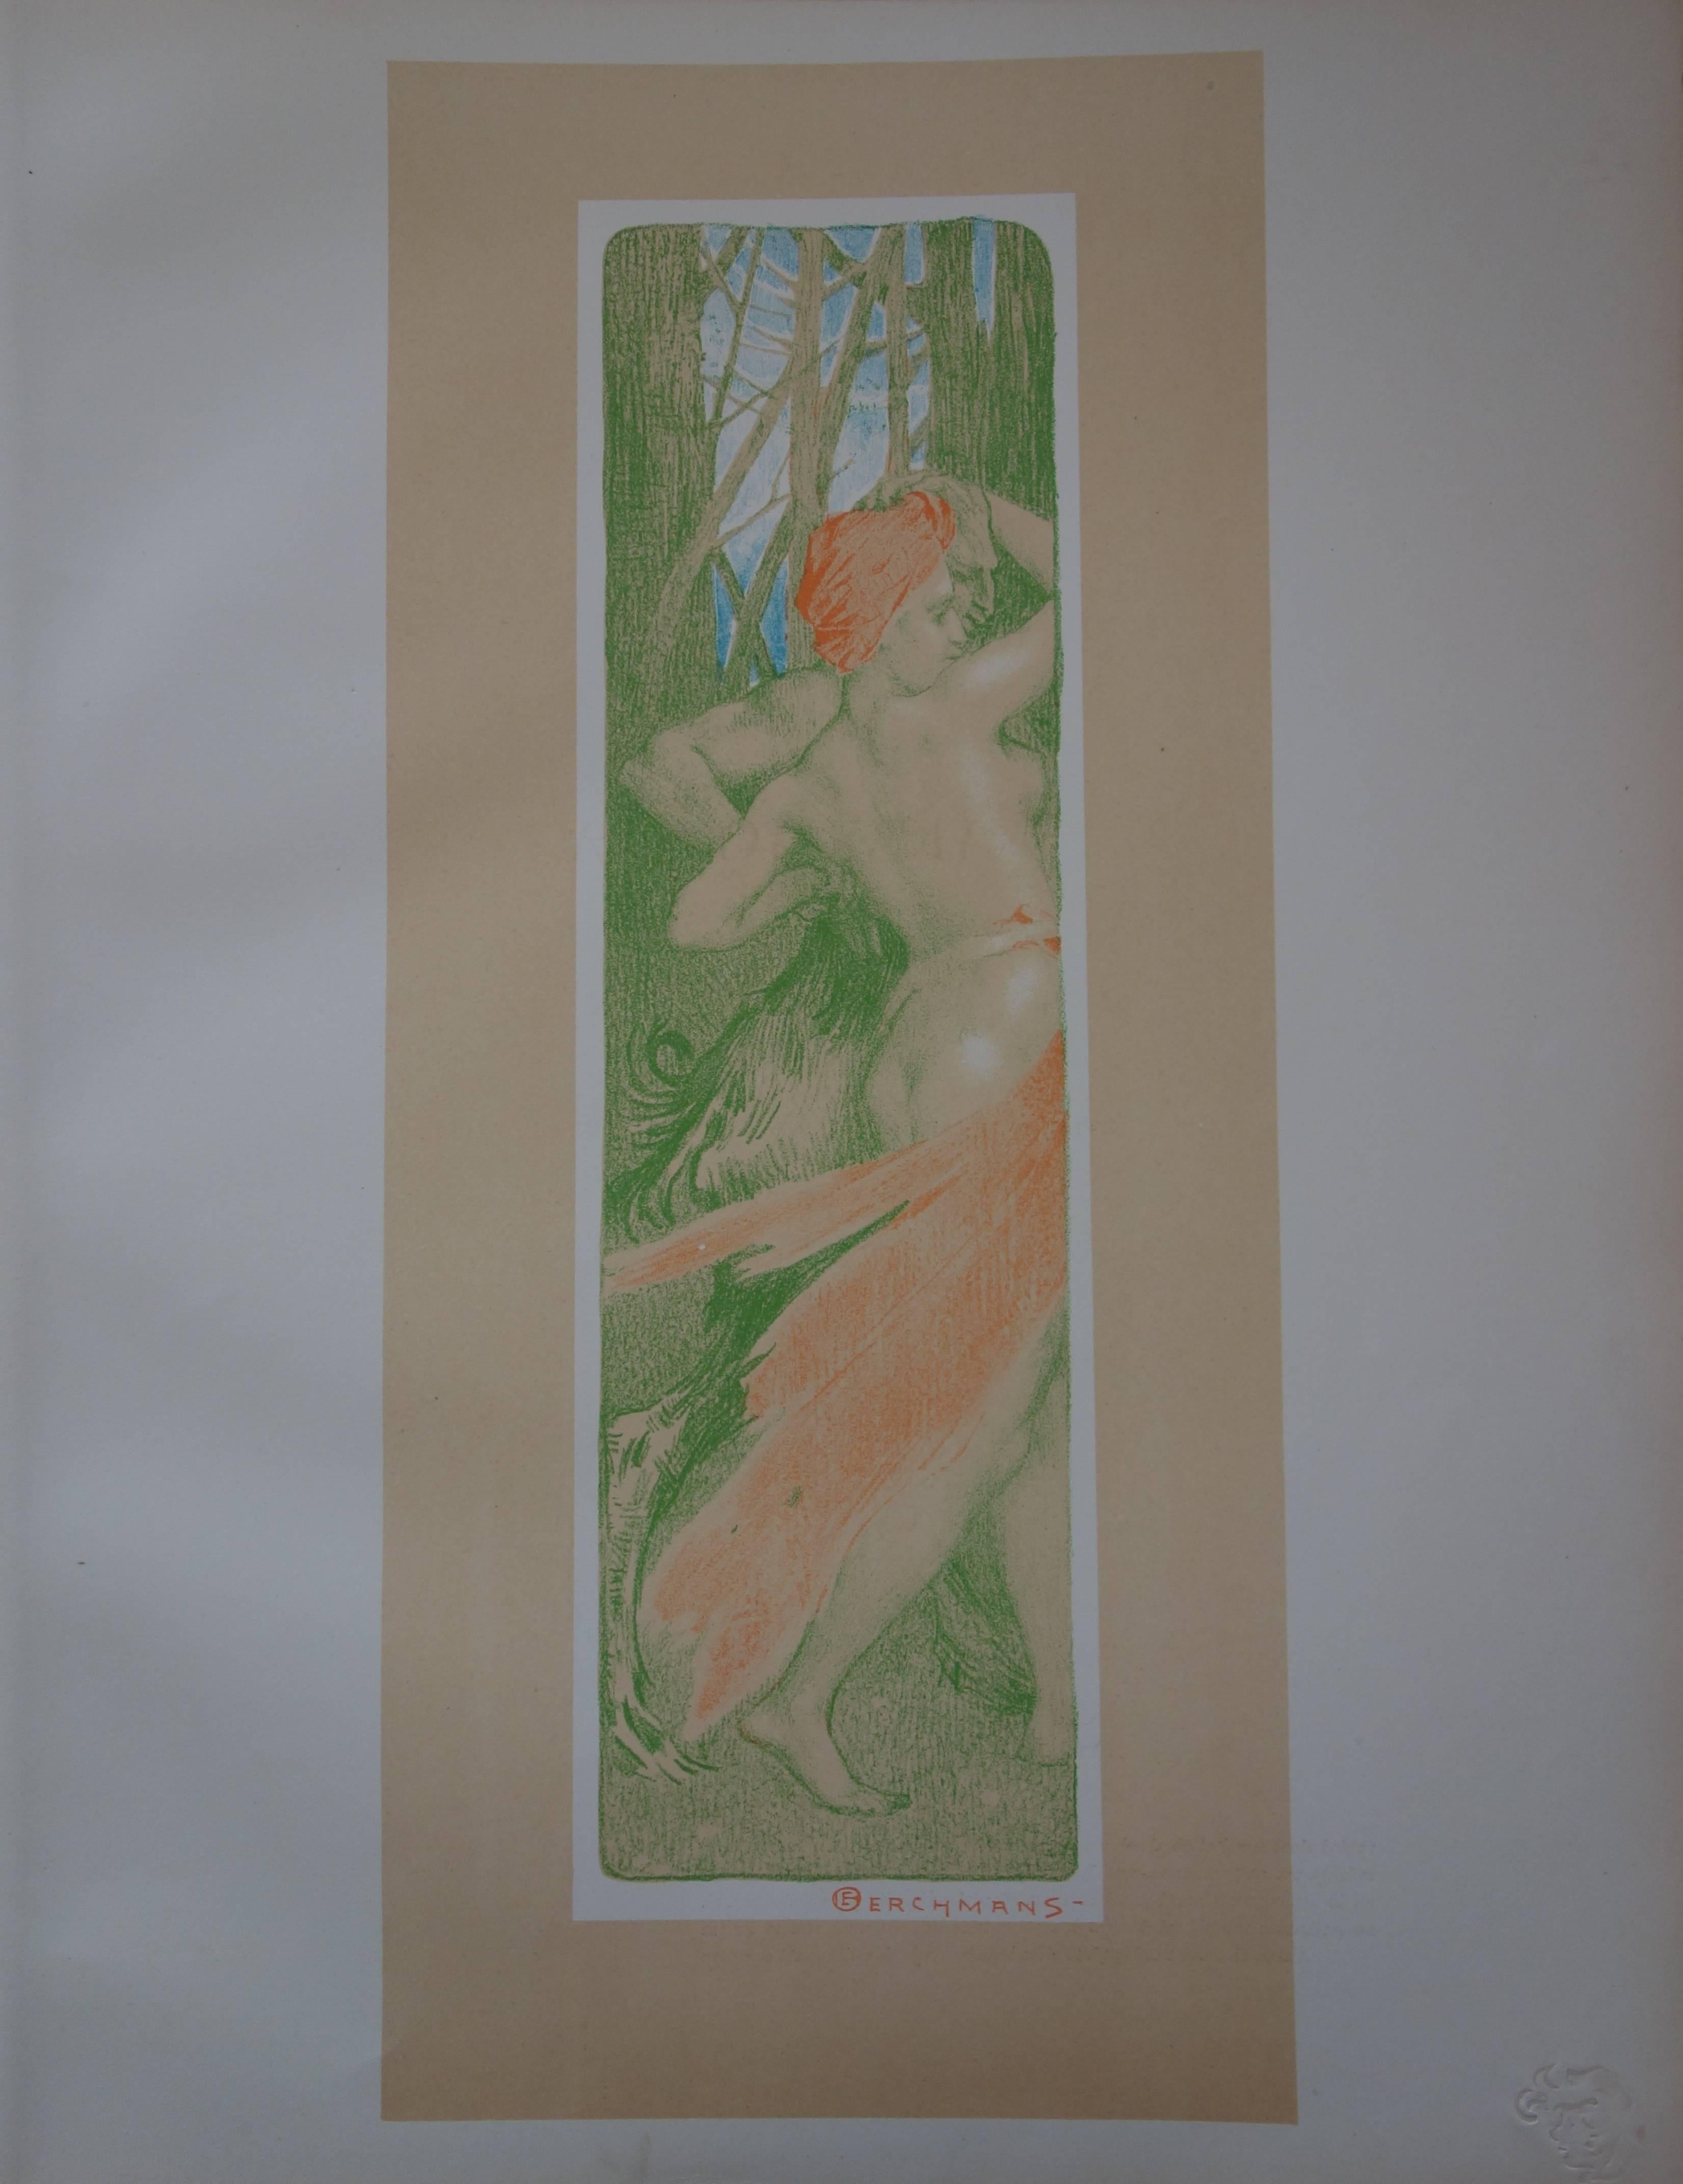 Émile Berchmans Figurative Print - Renewal - Original lithograph - 1897